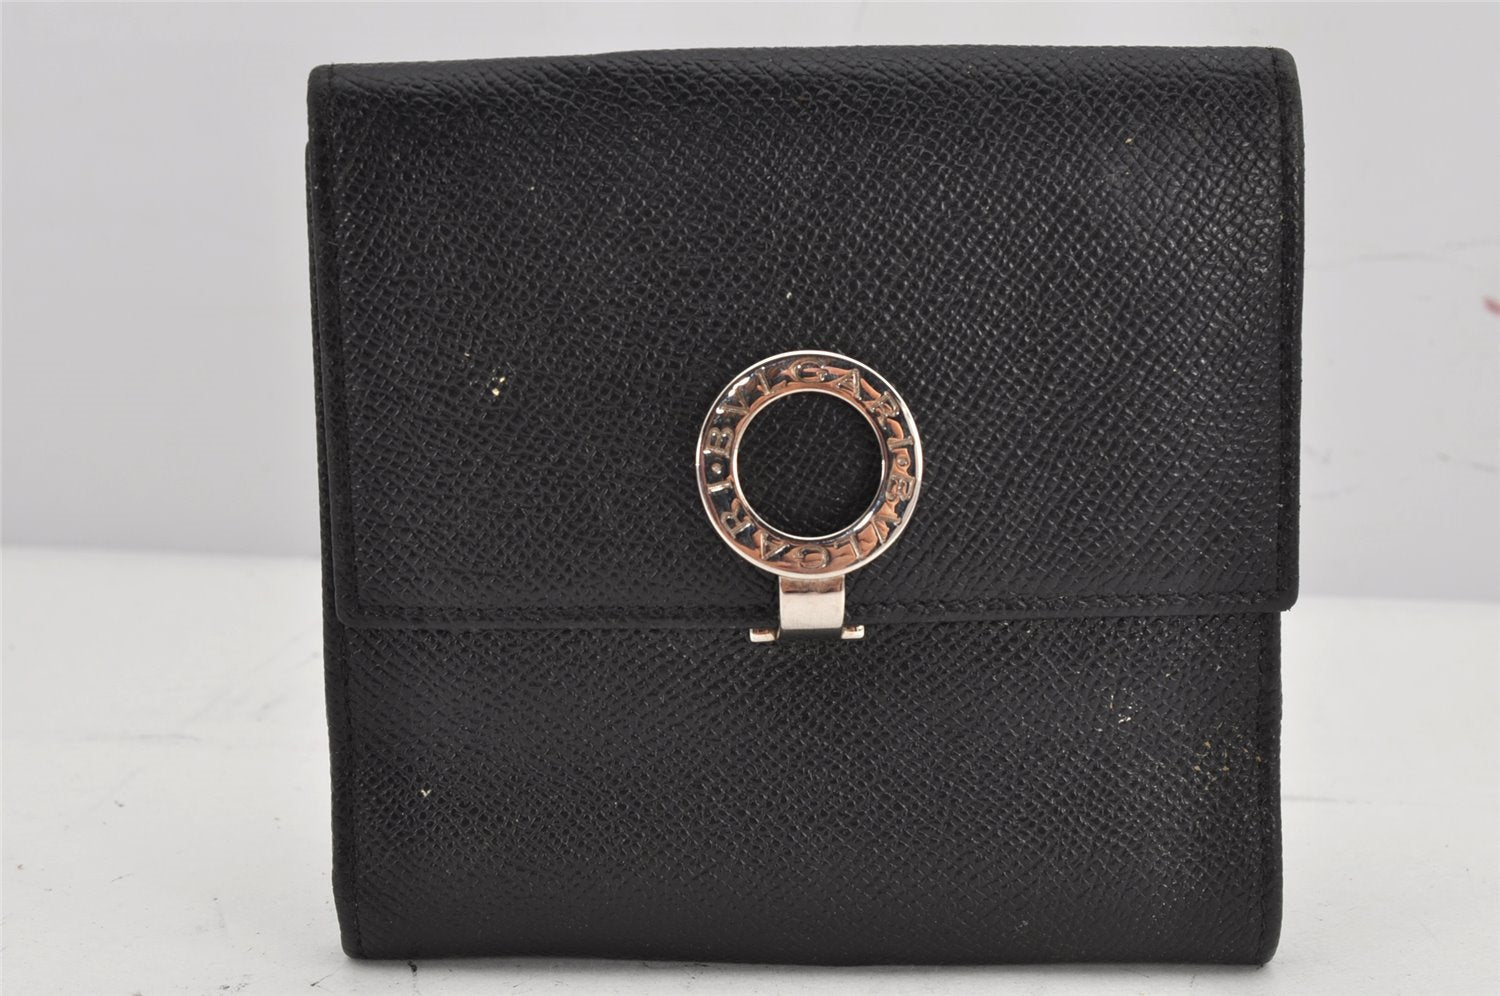 Authentic BVLGARI BVLGARI BVLGARI Leather Bifold Wallet Purse Black 9653J